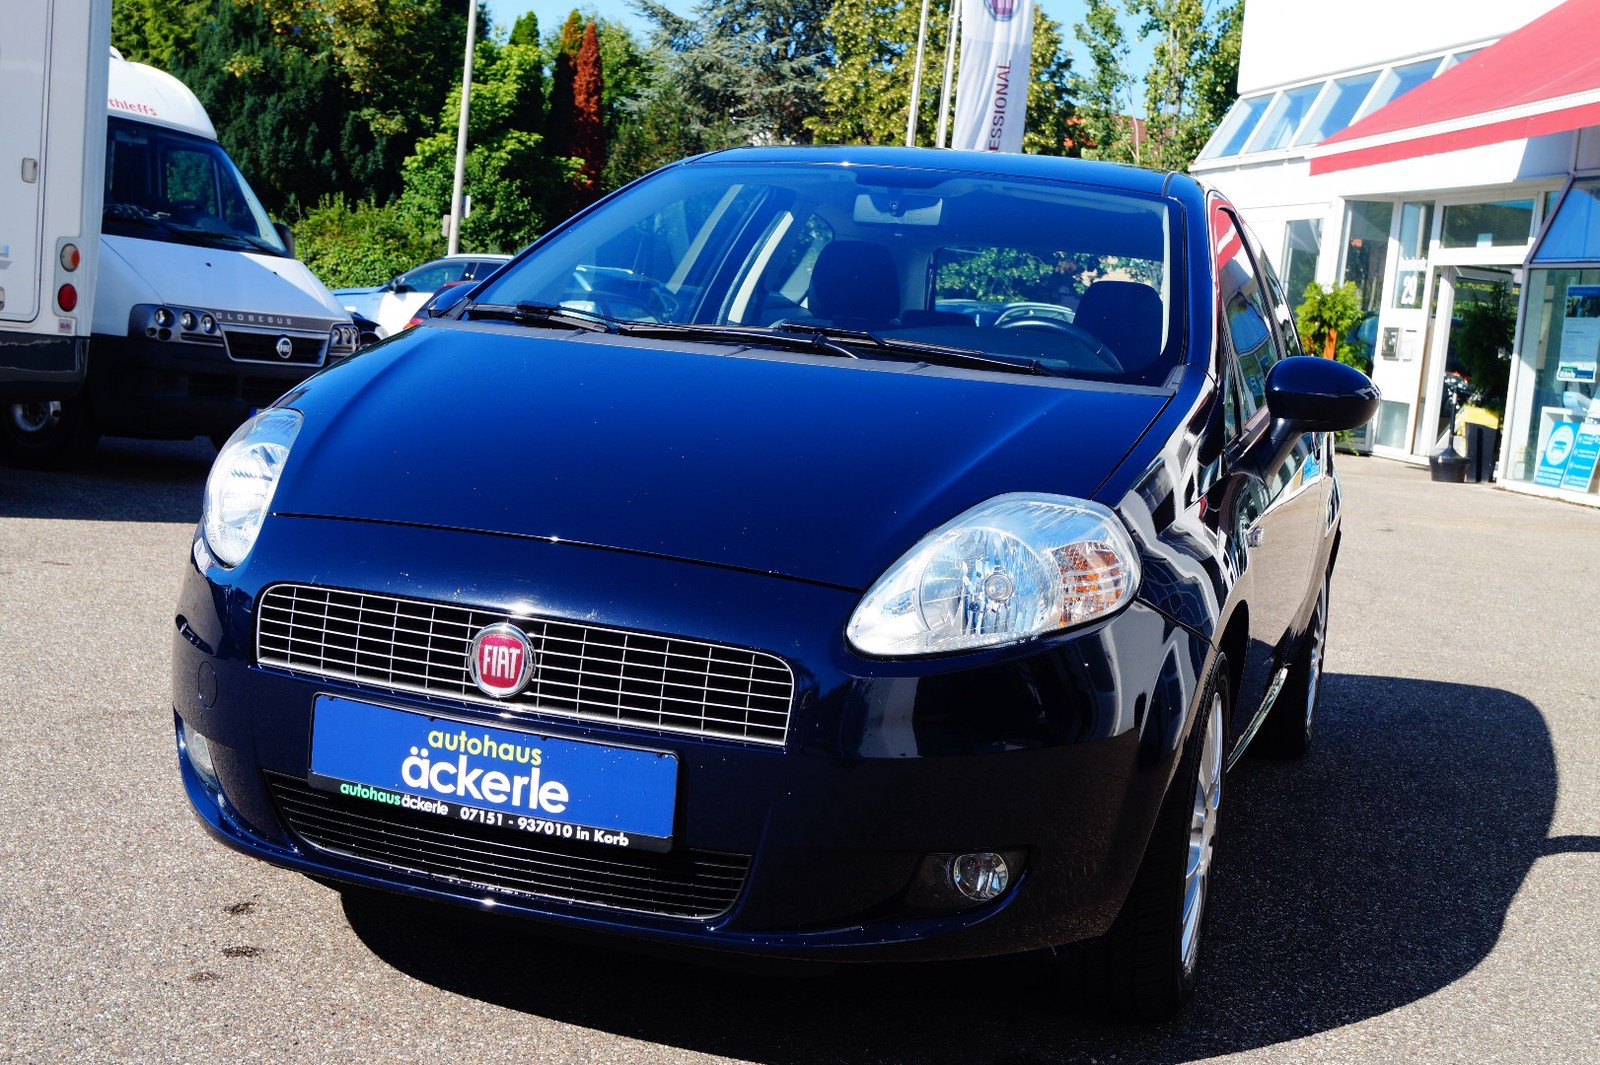 Fiat Grande Punto 1 4 8v Start Gebraucht Kaufen In Korb Preis 4690 Eur Int Nr 951 Verkauft